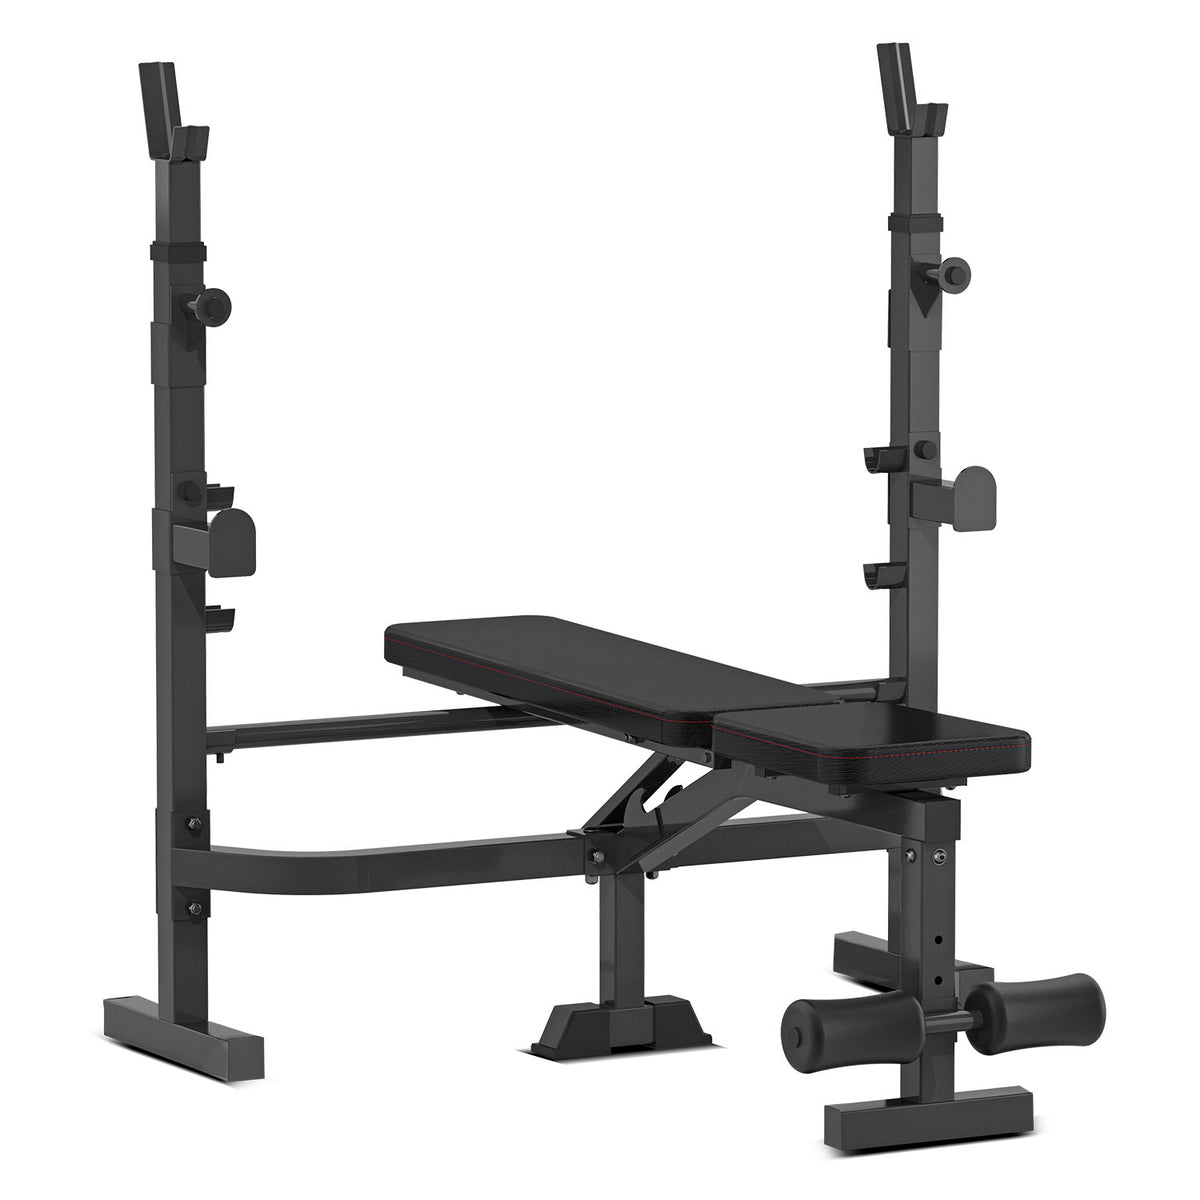 CORTEX MF4000 Bench Press with 90kg Standard Tri-Grip Weight and Bar Set